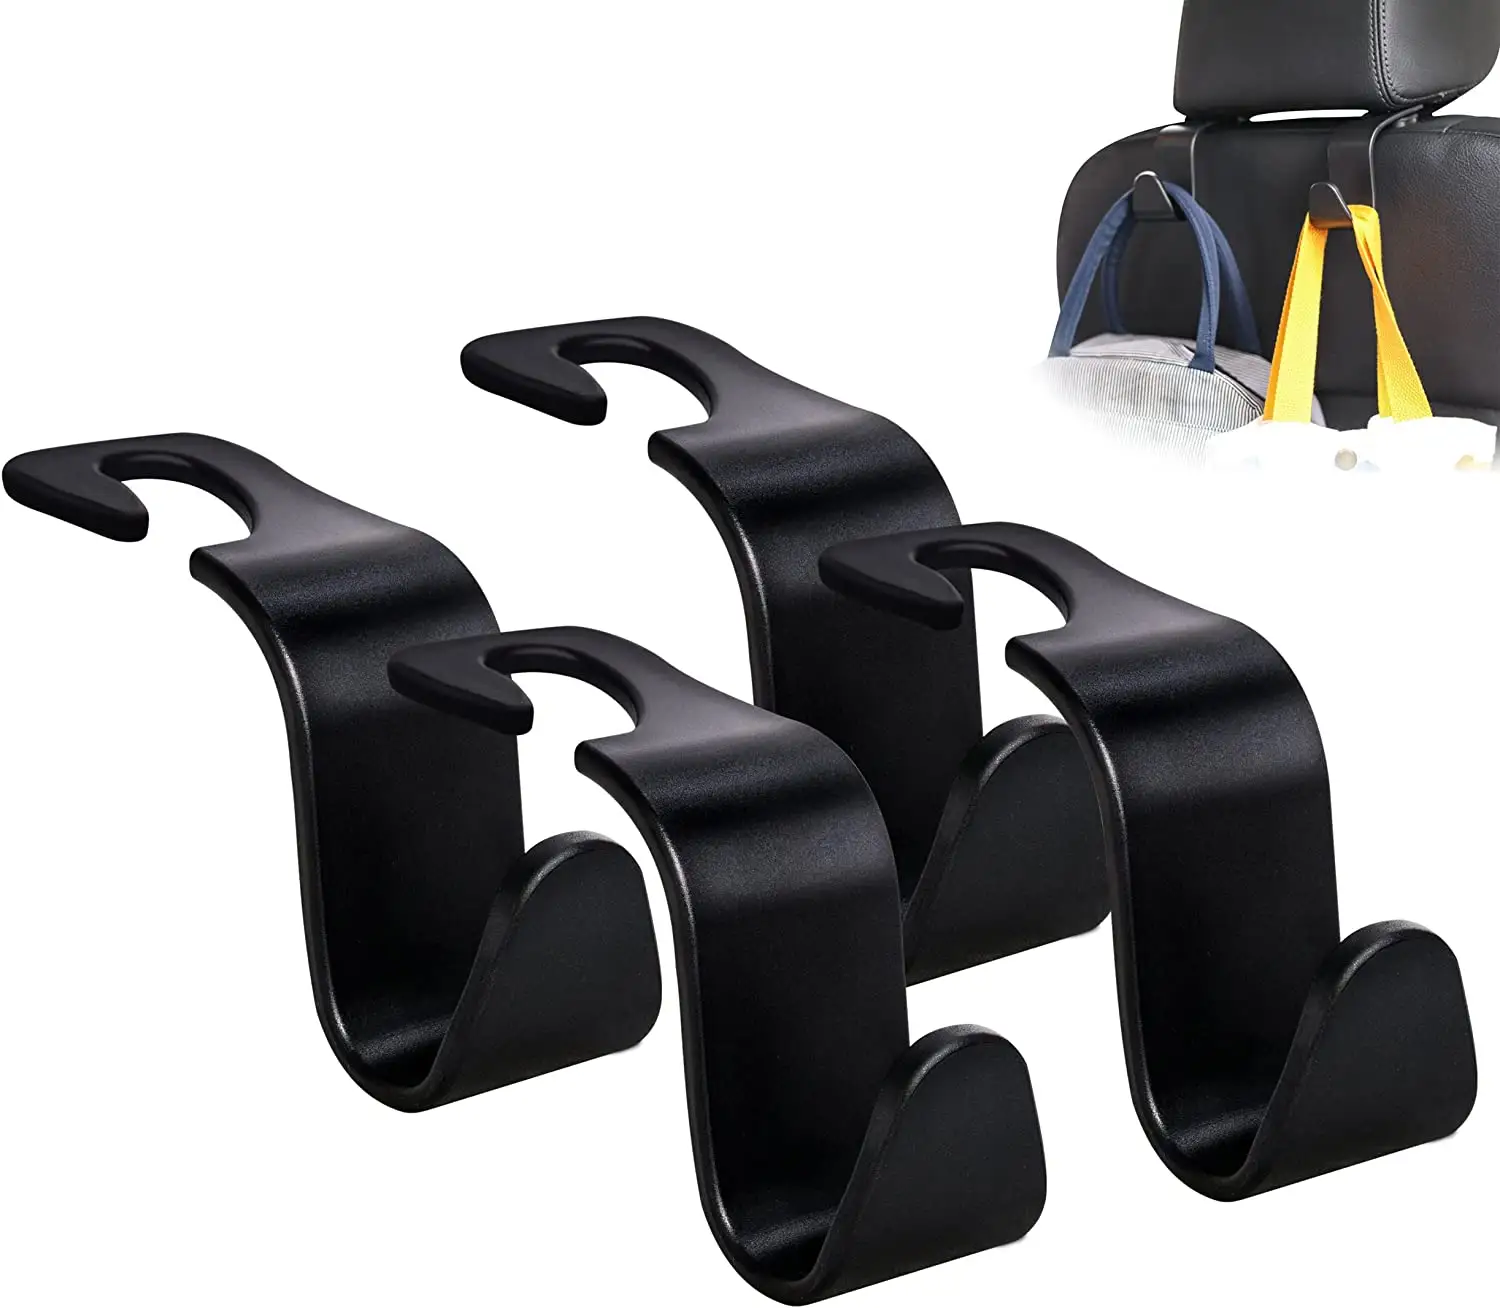 Car Seat Headrest Hook 4 Pack Hanger Storage Organizer Universal for Handbag Purse Coat Fit Universal Vehicle Car